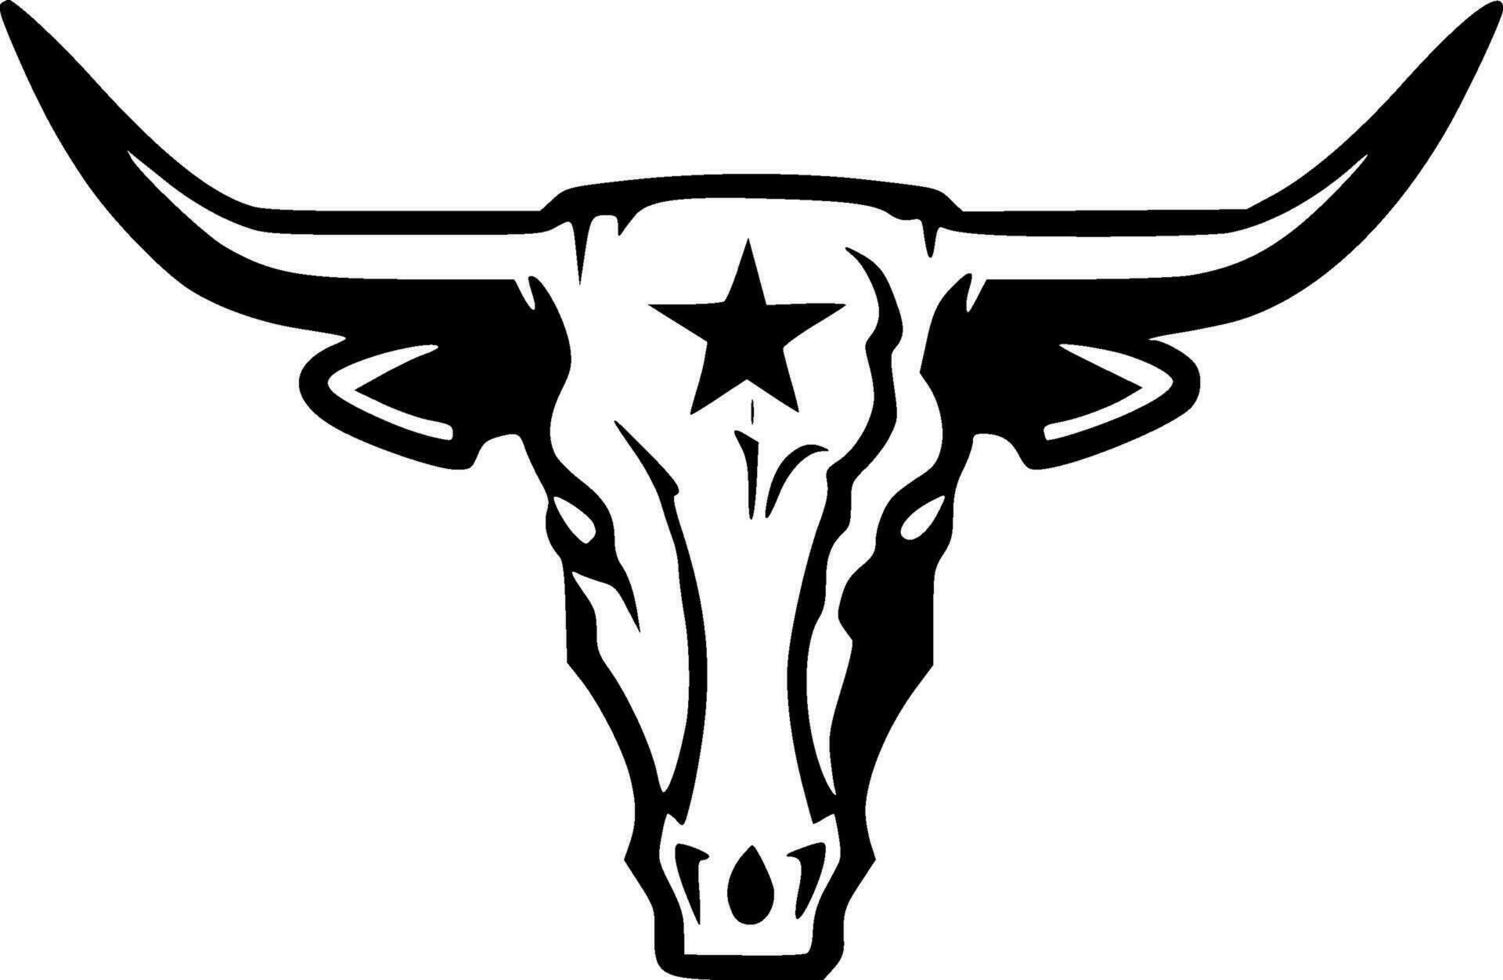 Texas Longhorn Head - High Quality Vector Logo - Vector illustration ideal for T-shirt graphic